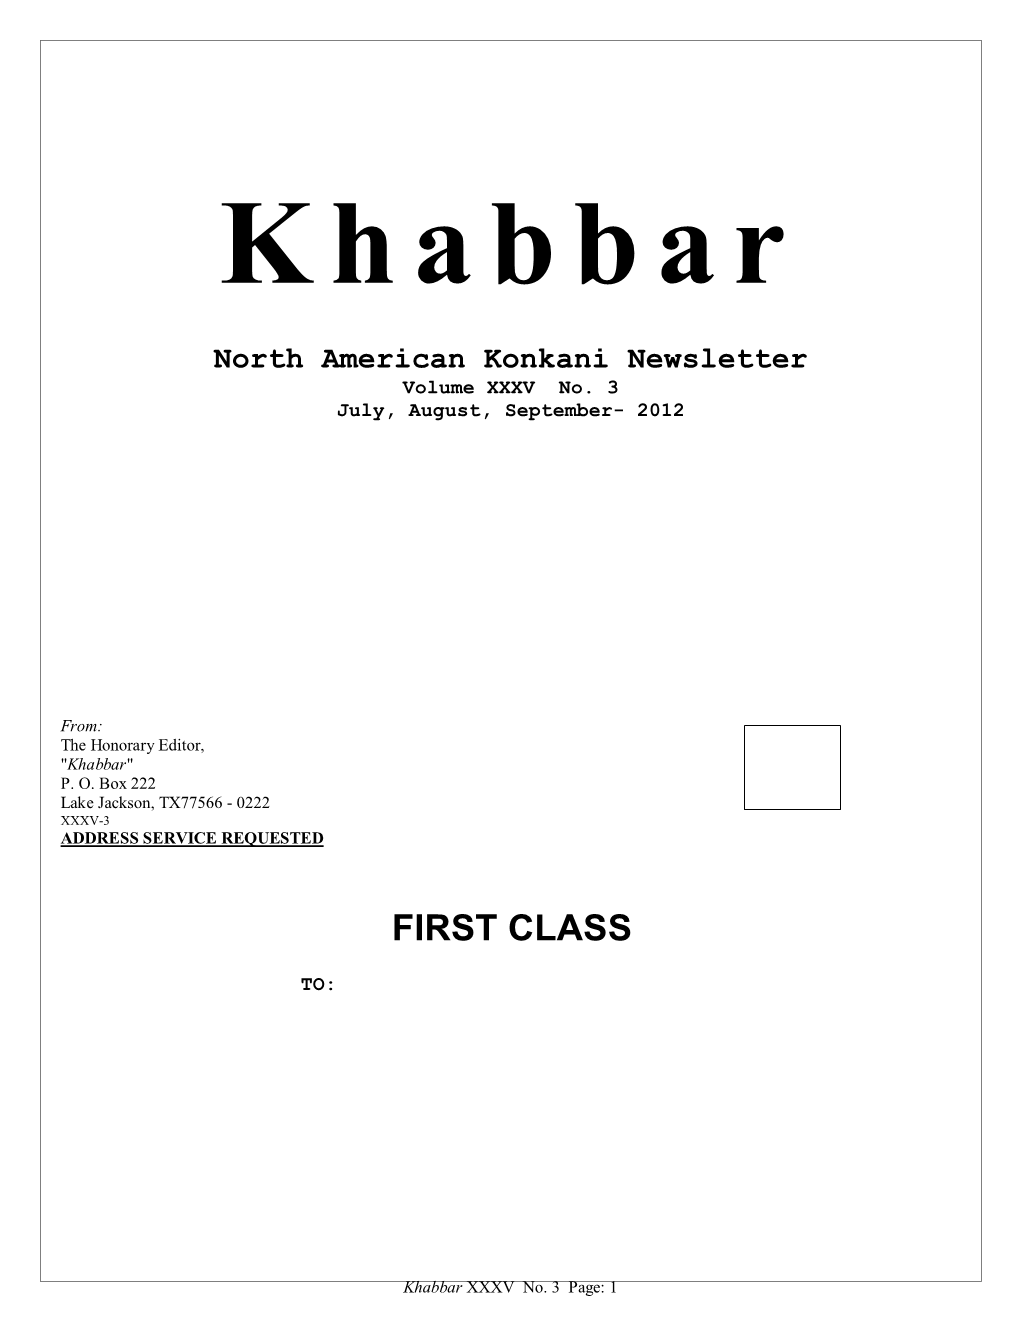 North American Konkani Newsletter Volume XXXV No